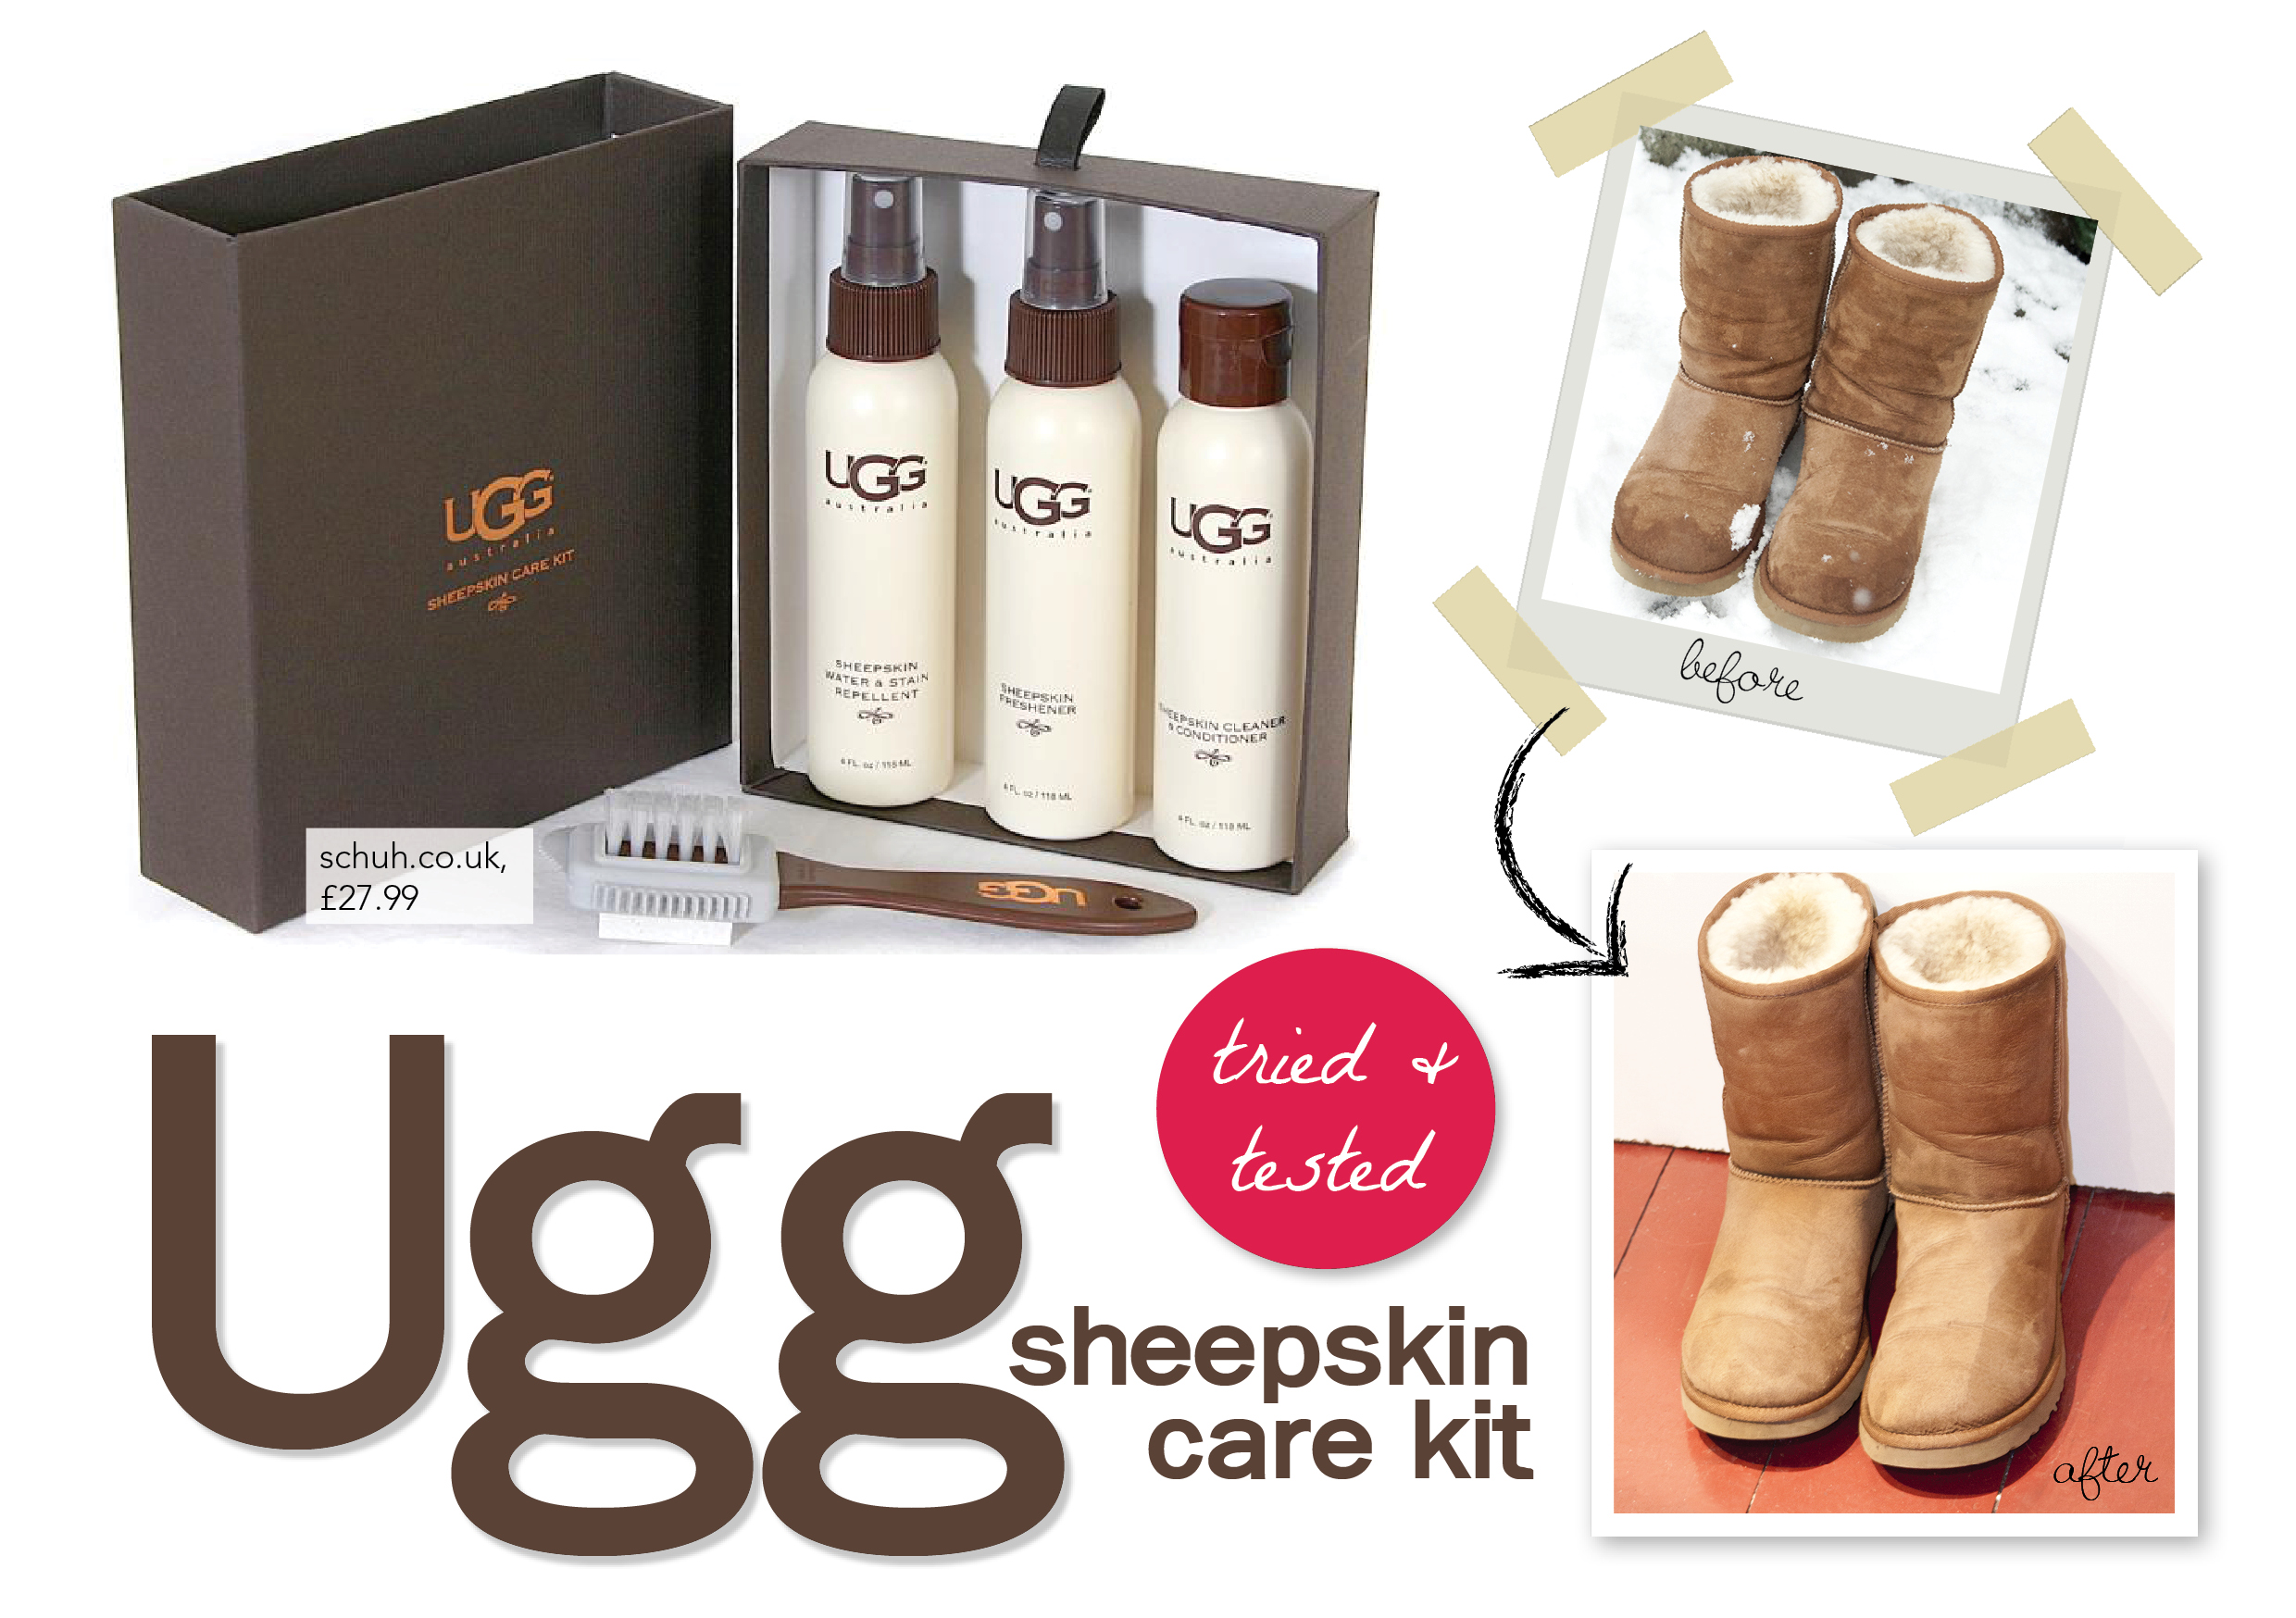 ugg shoe cleaning kit